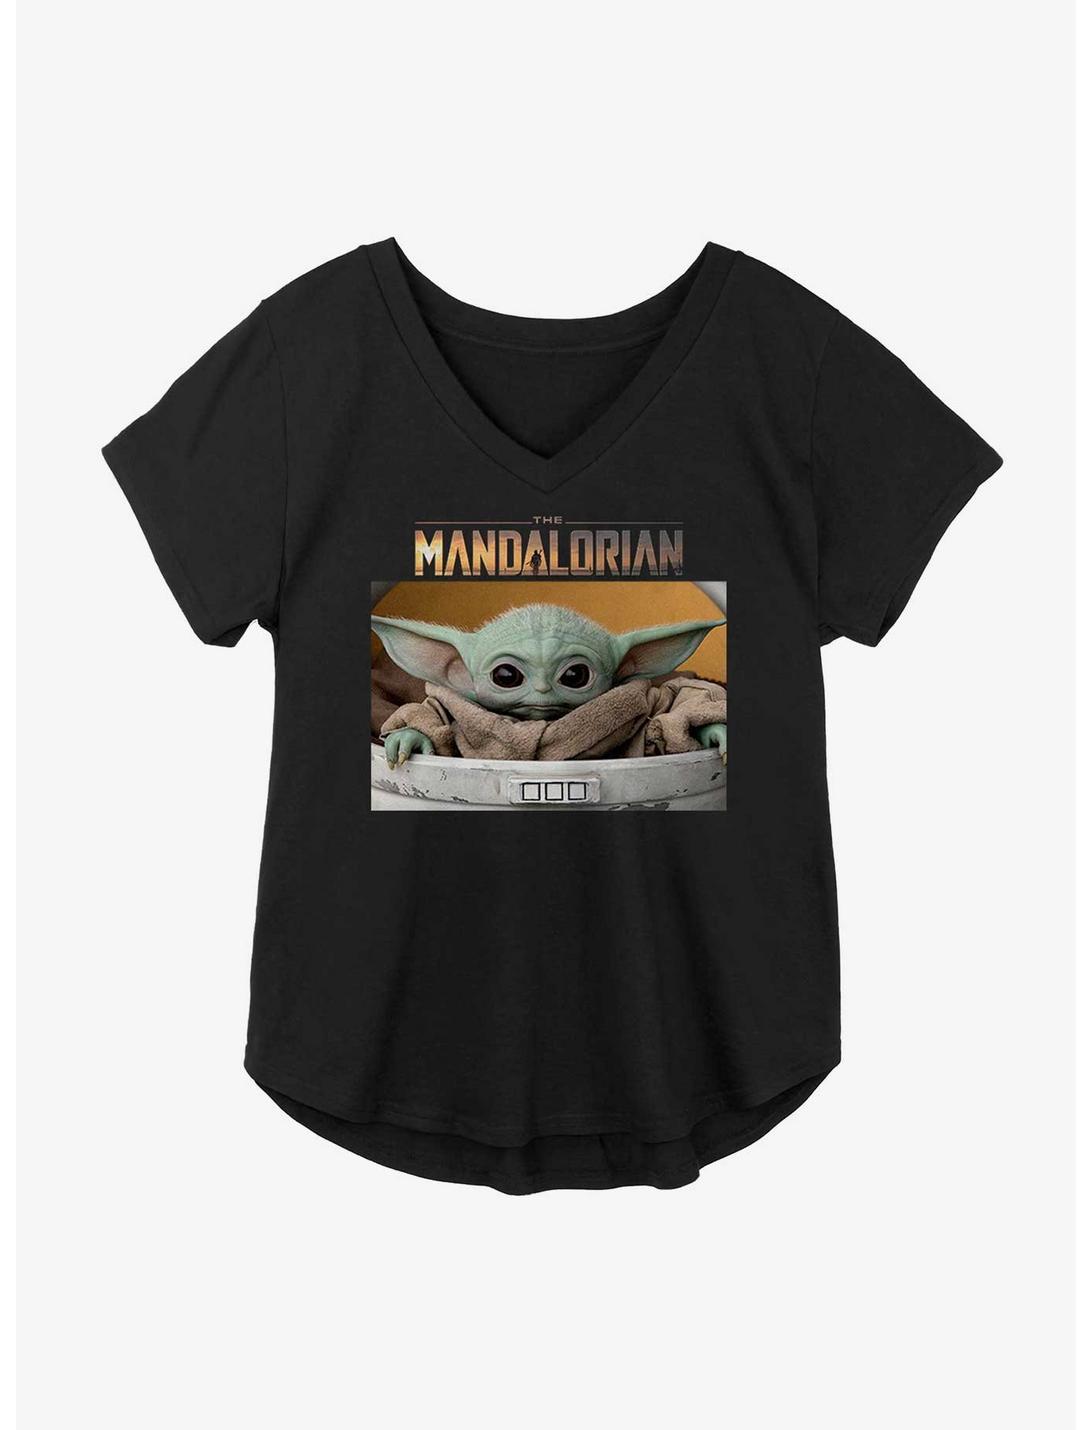 Star Wars The Mandalorian The Child Small Box Girls Plus Size T-Shirt, BLACK, hi-res